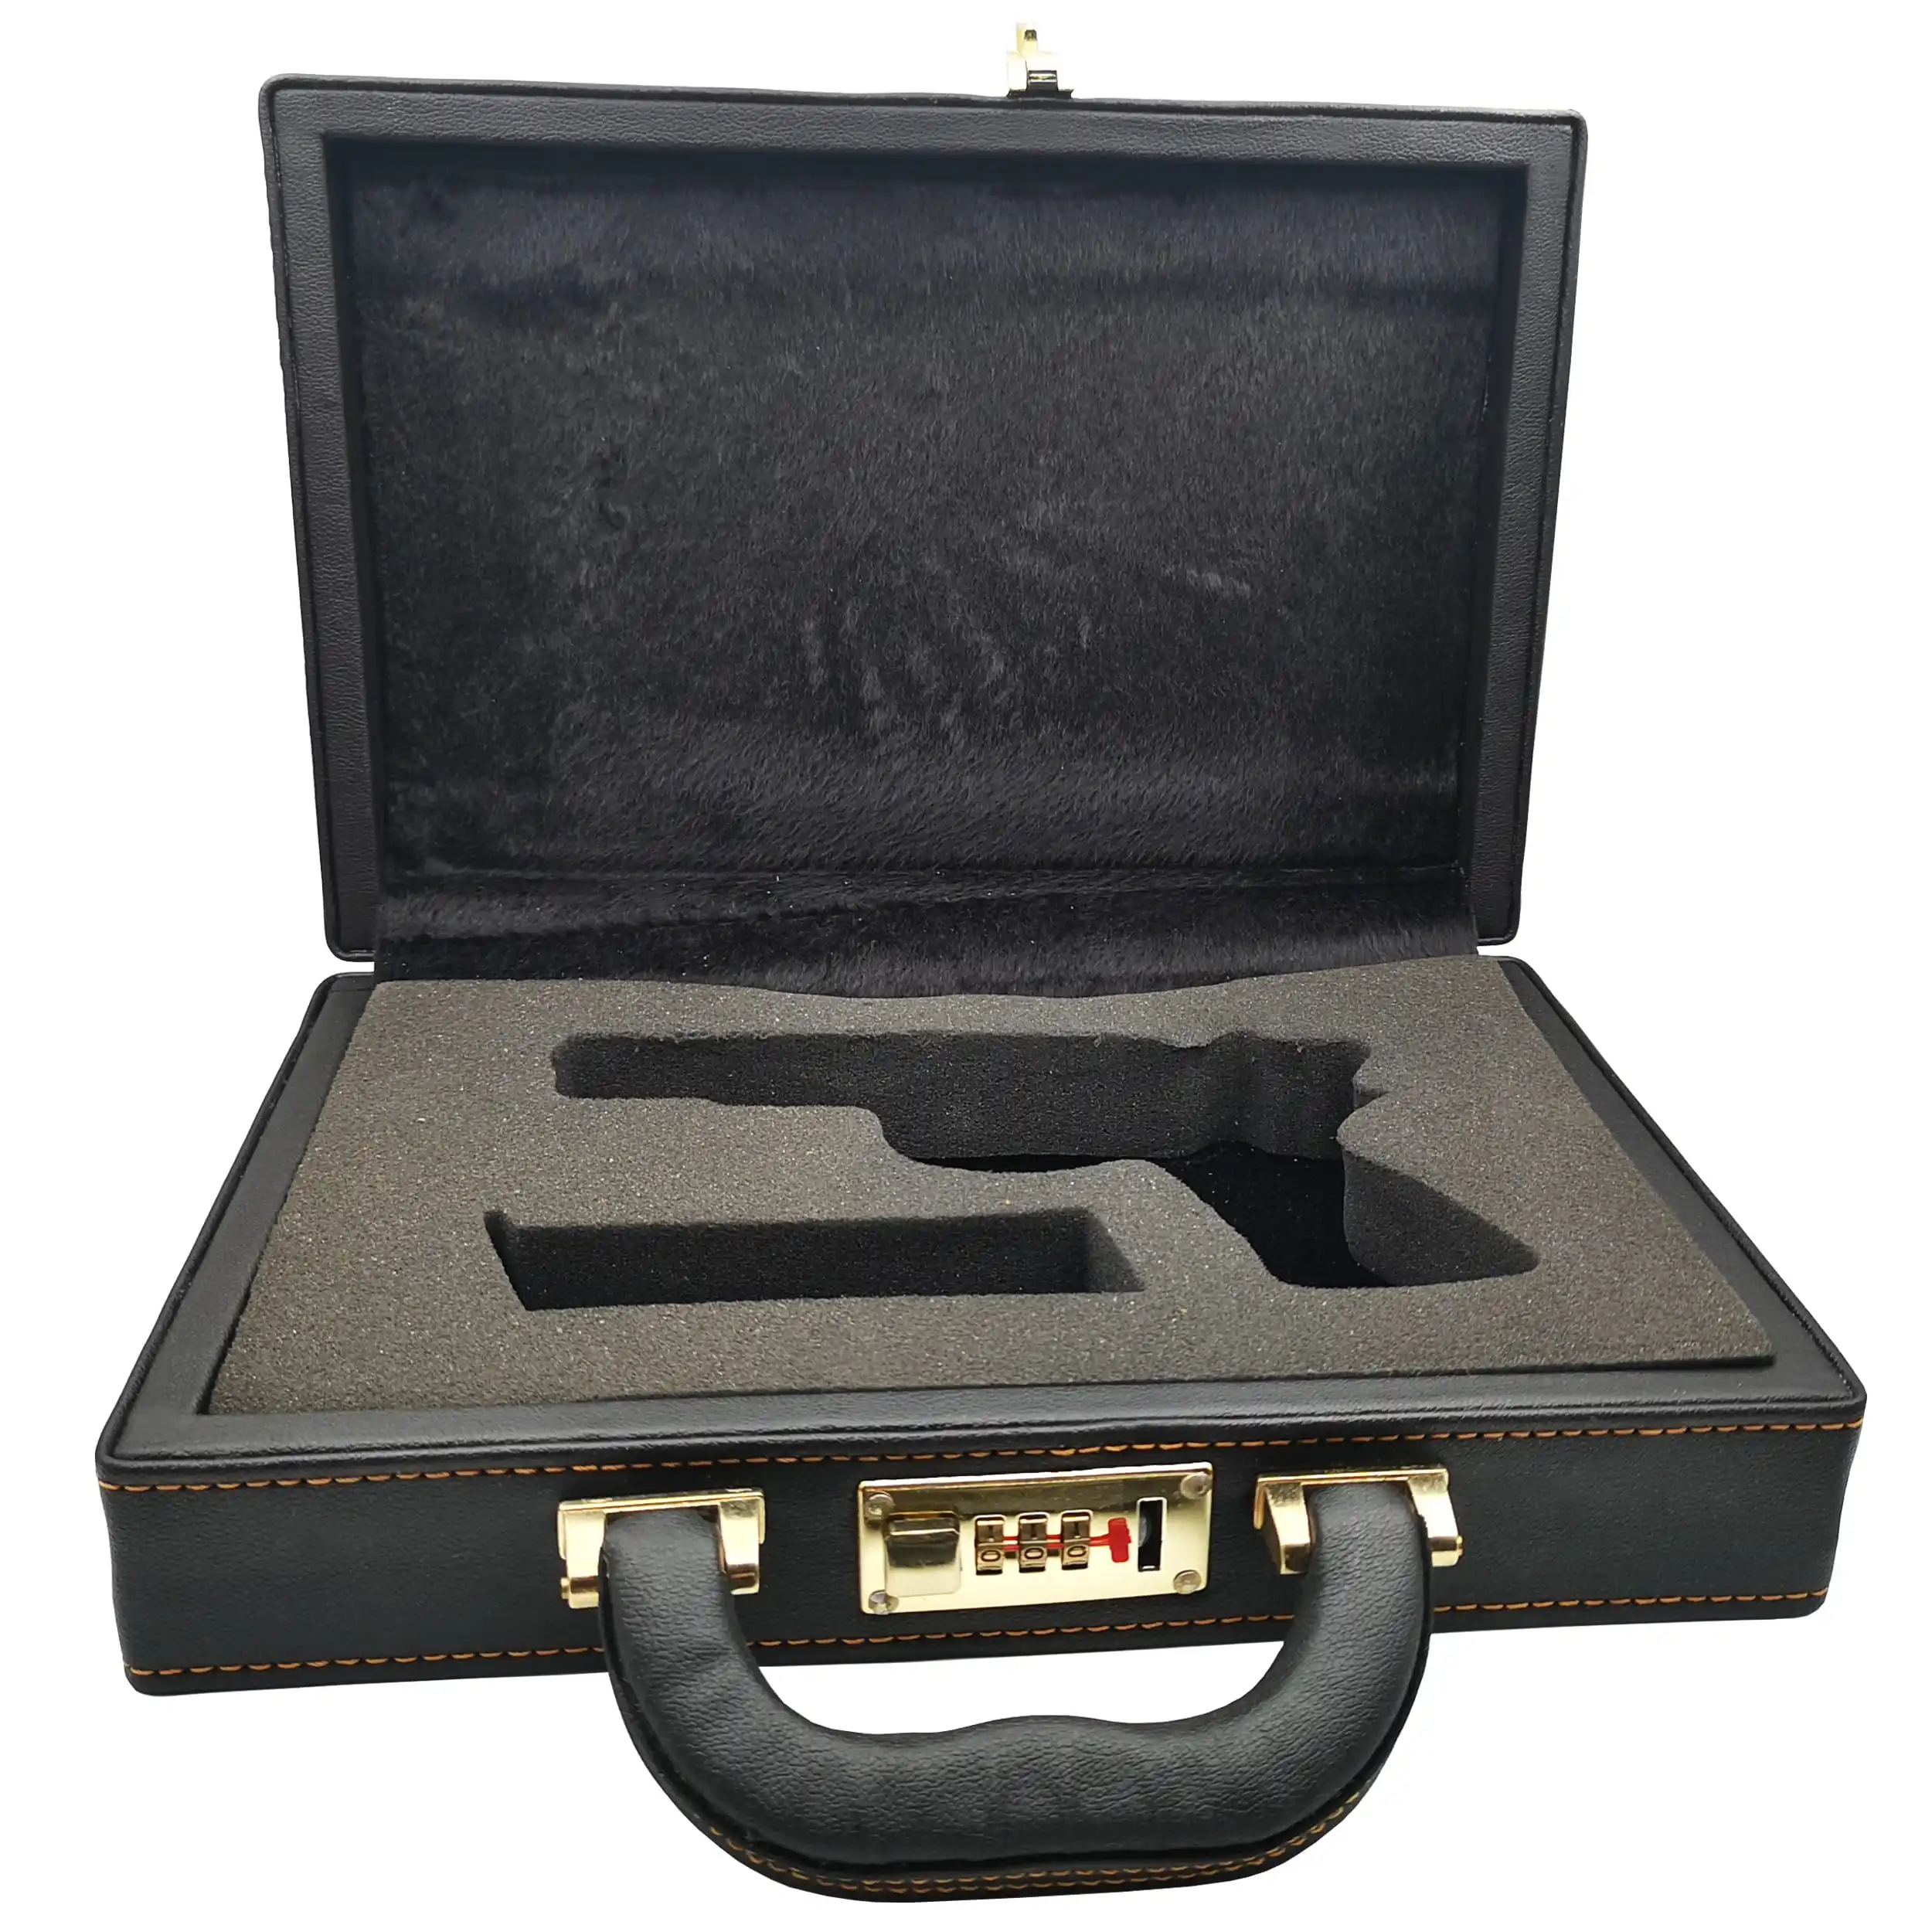 

Glock 19 Leather Gun Case Bond Style Personalized Password Lock System Handgun Carry And Storage Woden Box